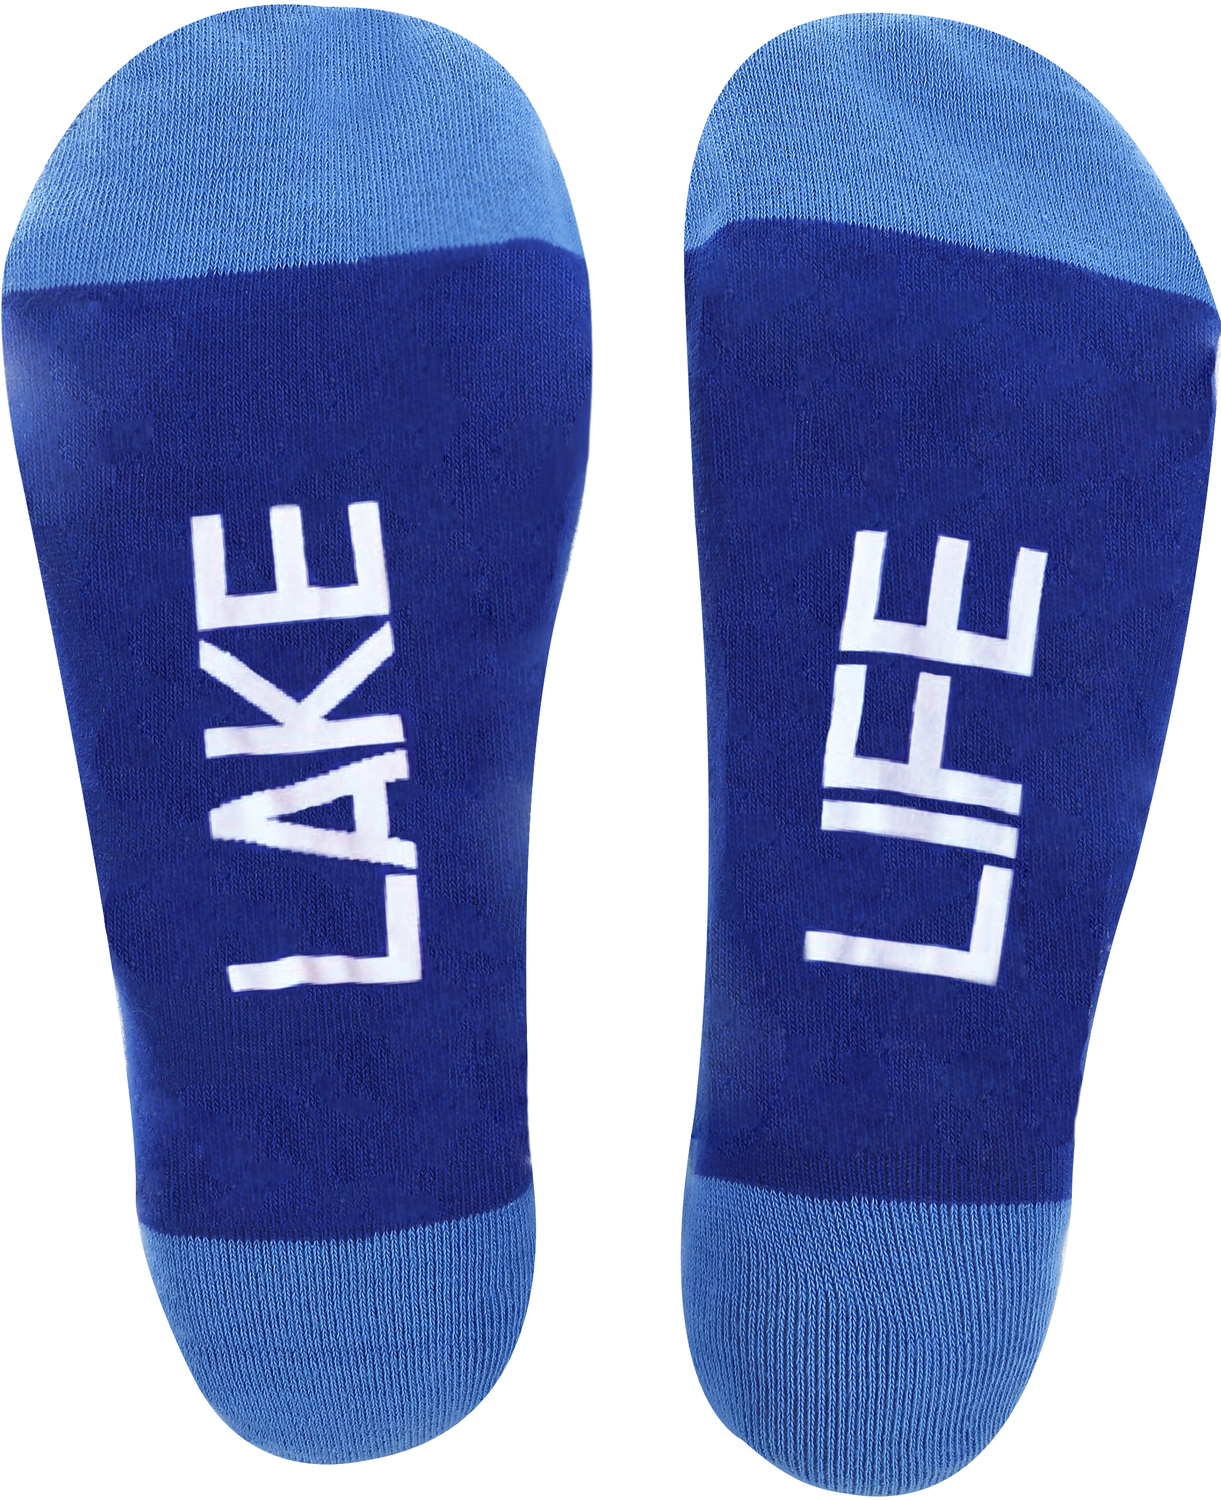 Lake Life by We People - Lake Life - M/L Unisex Socks